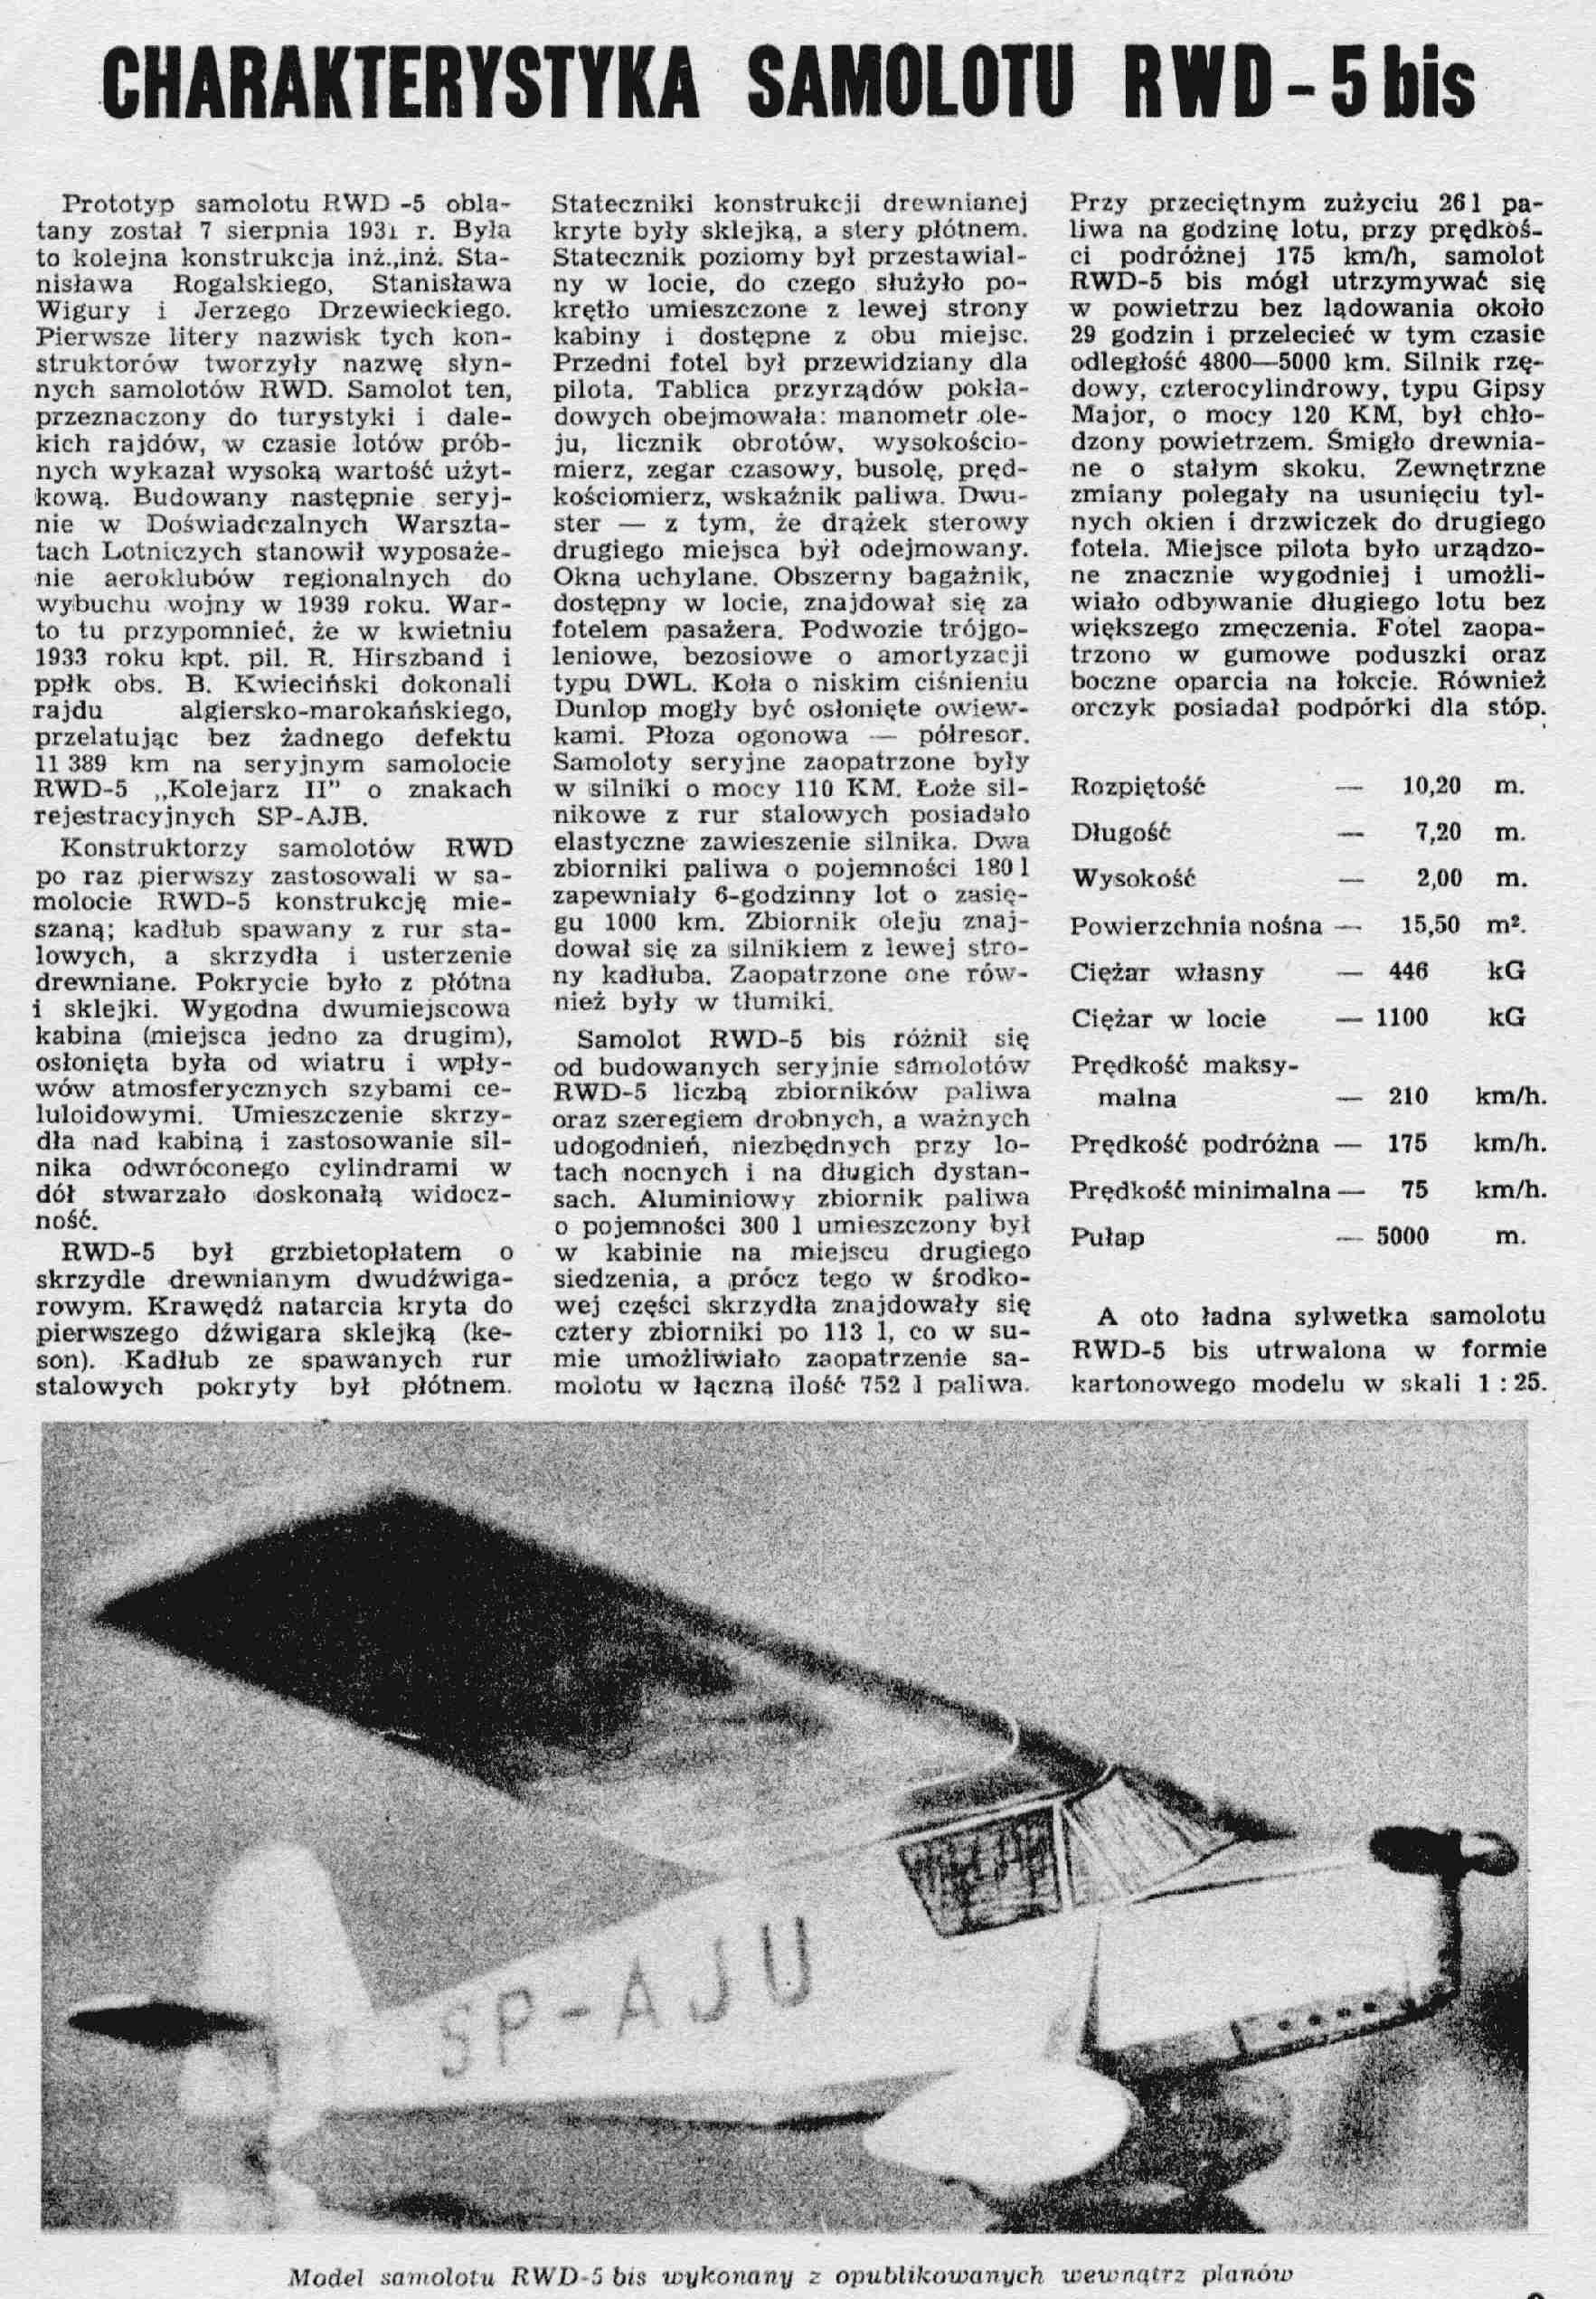 "Maly Modelarz" 8, 1969 9 с.